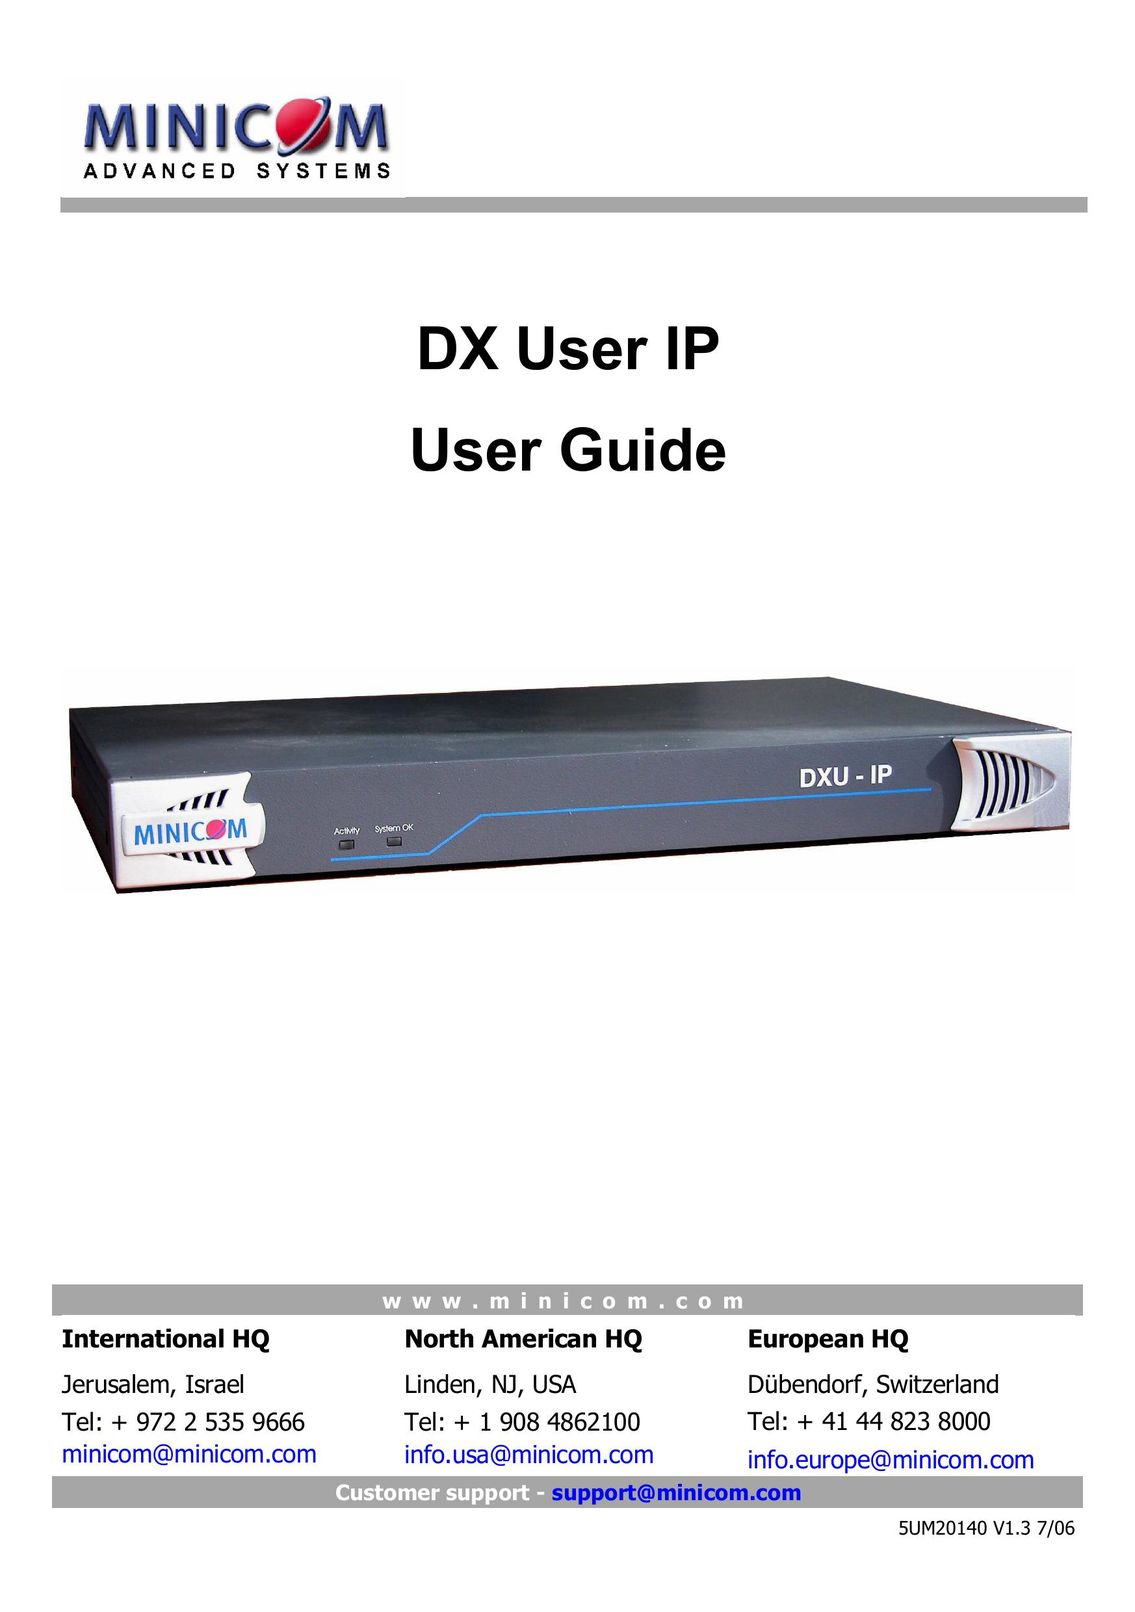 Minicom Advanced Systems DX User IP Switch User Manual